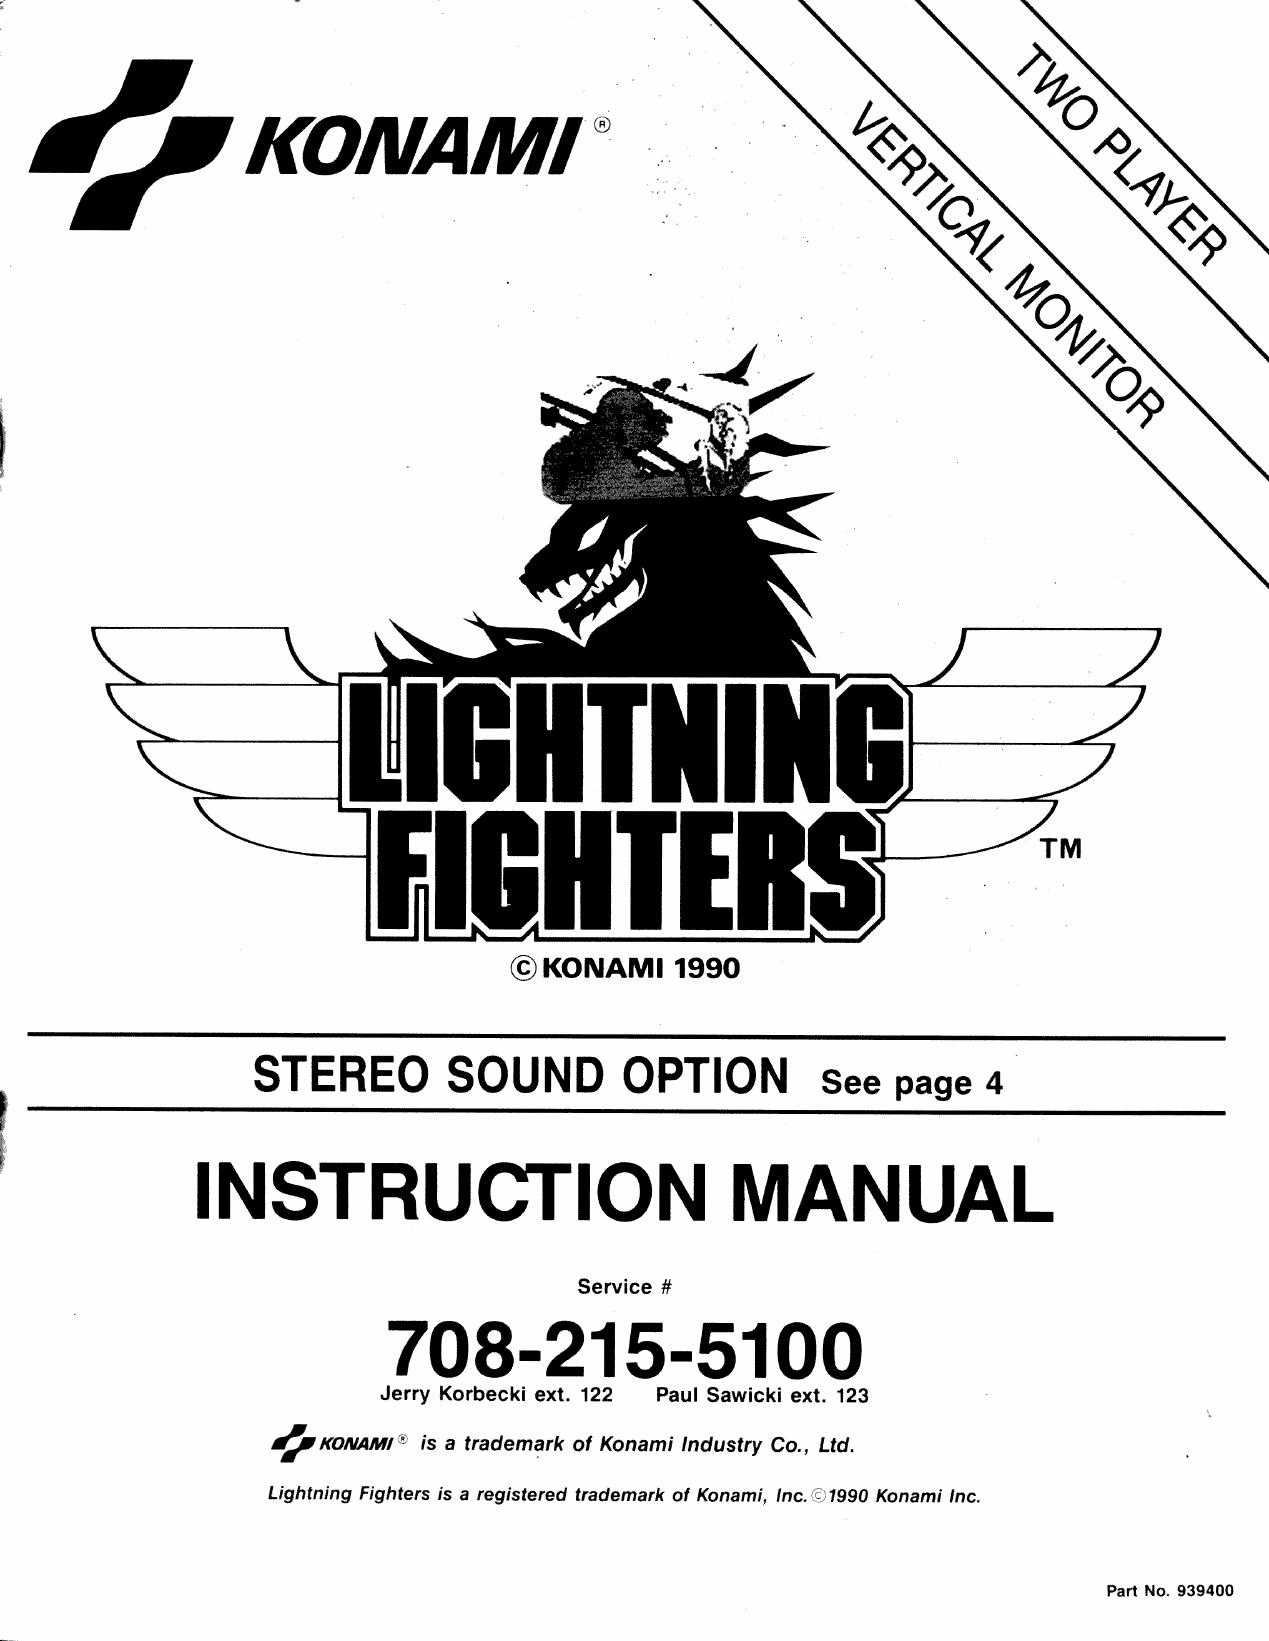 LightningFighters Manual